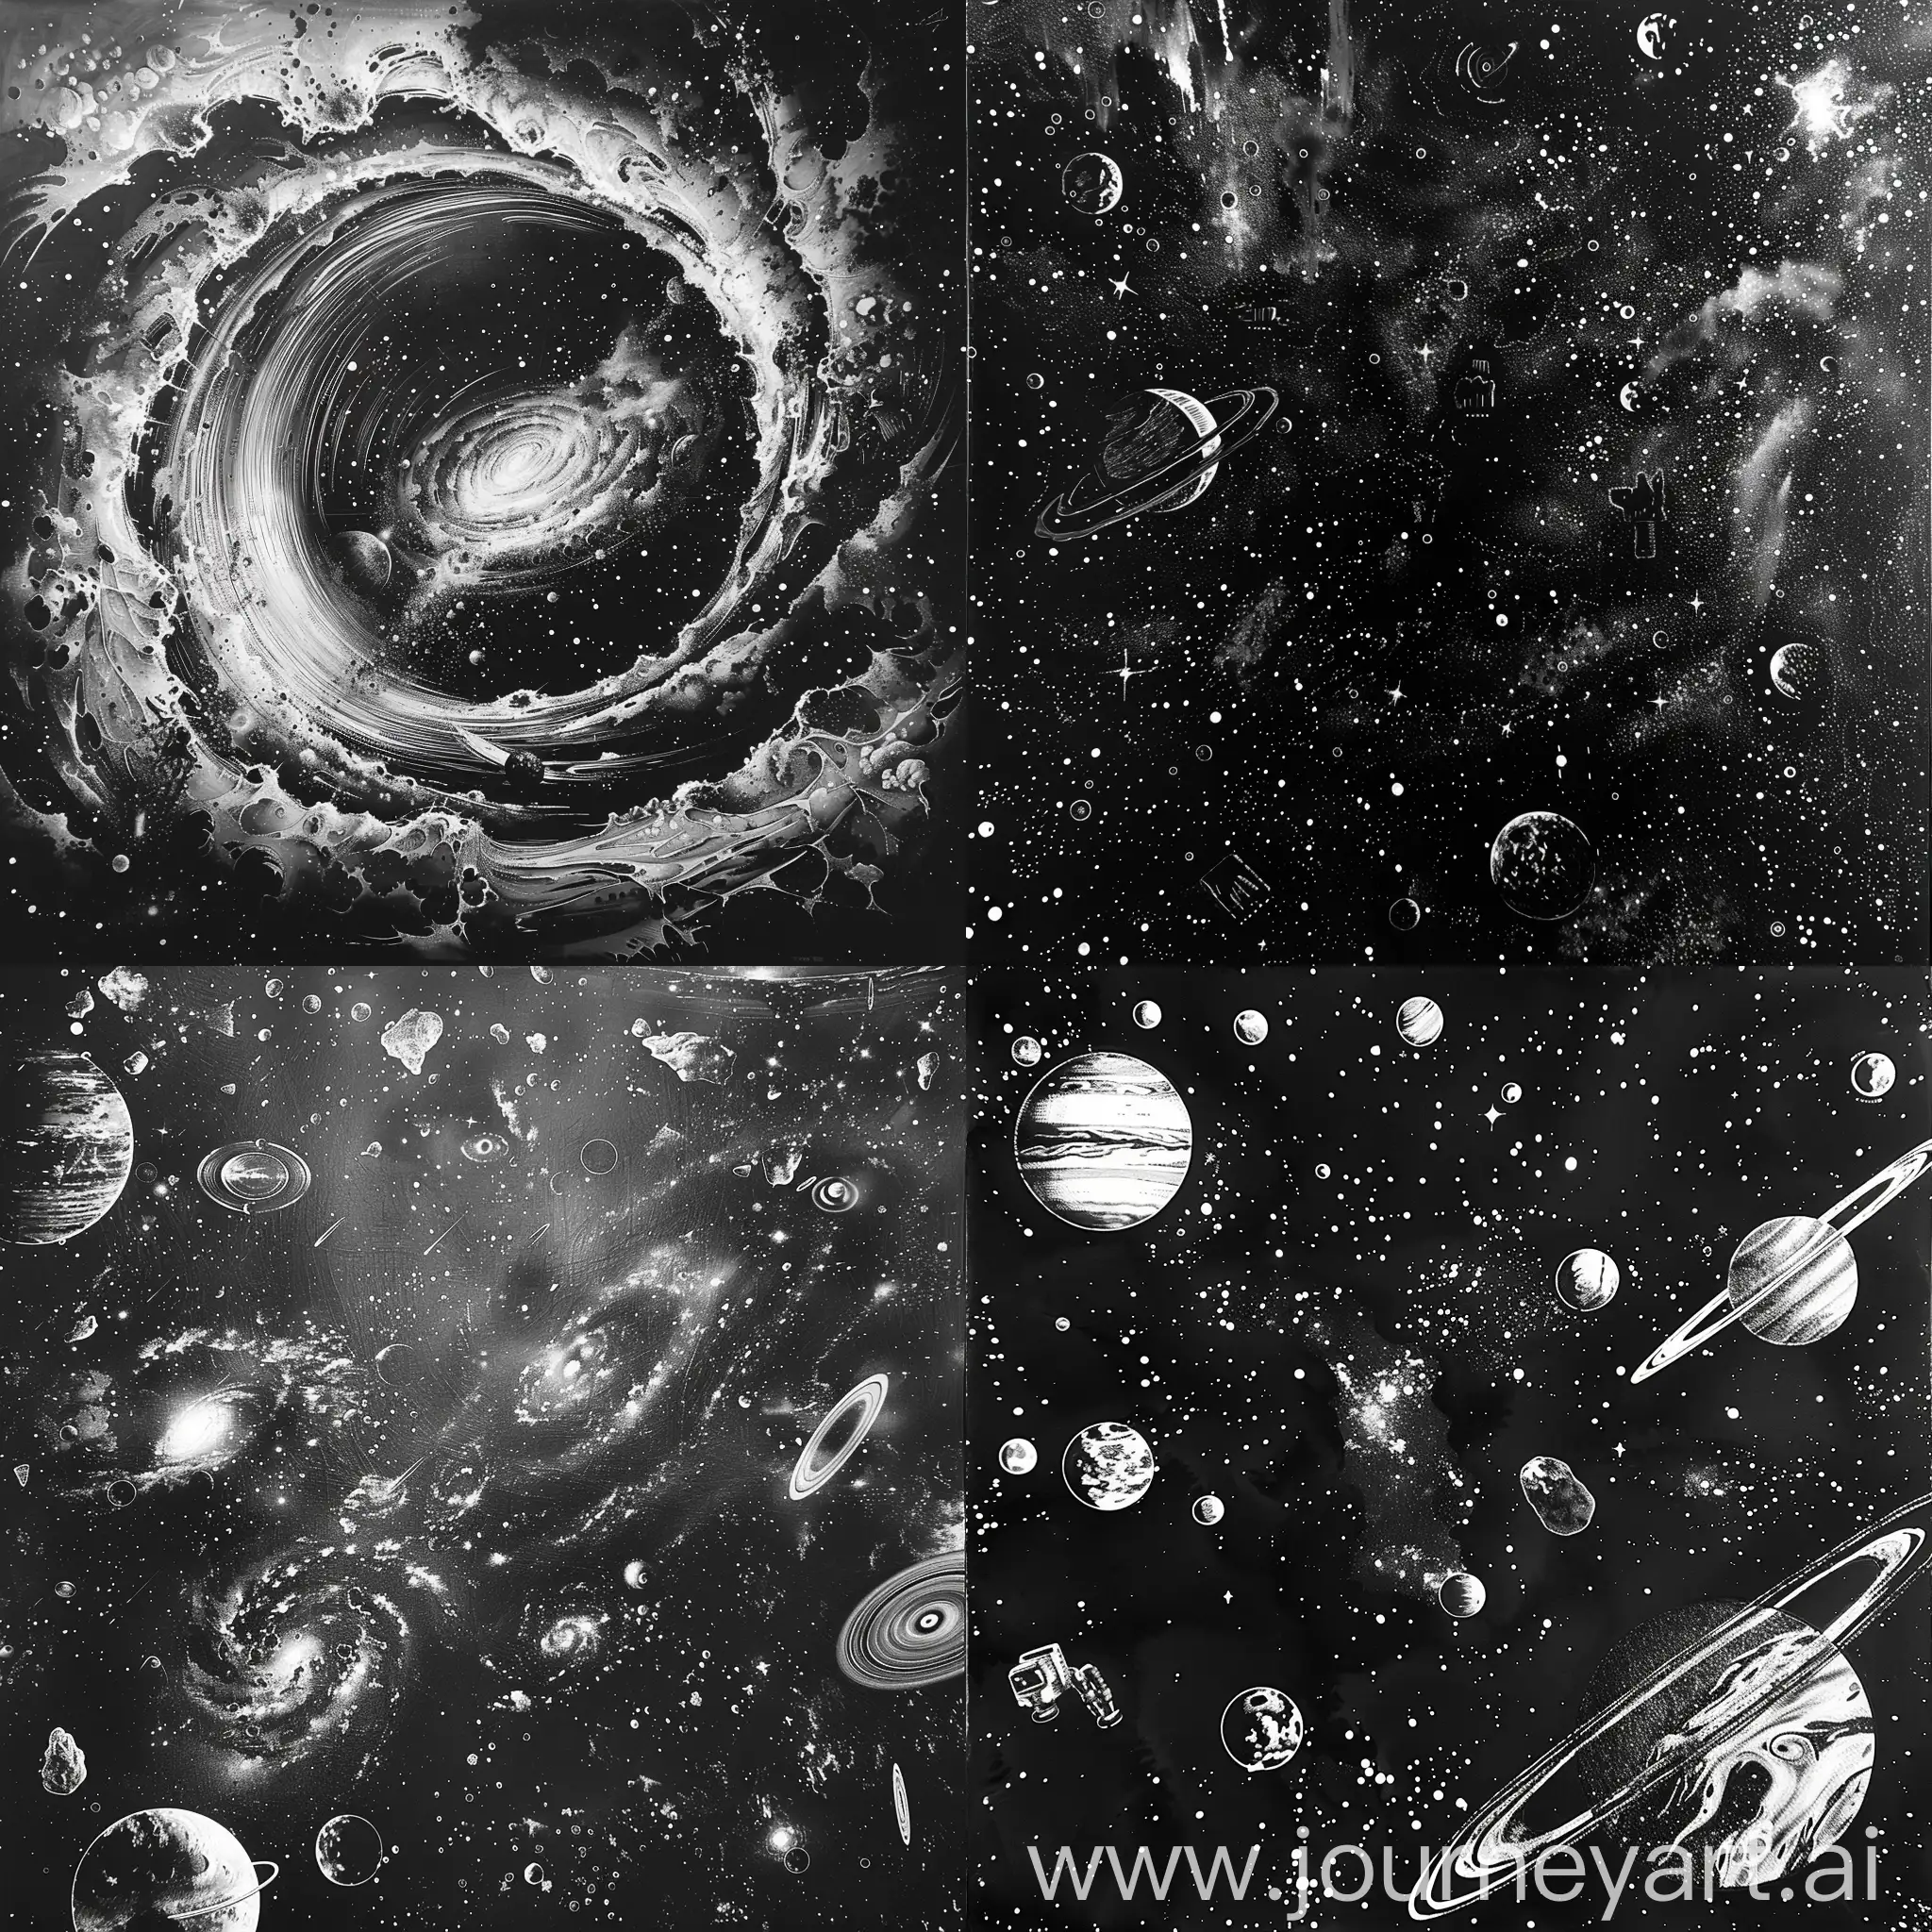 Monochrome-Cosmos-Exploring-a-Black-and-White-Universe